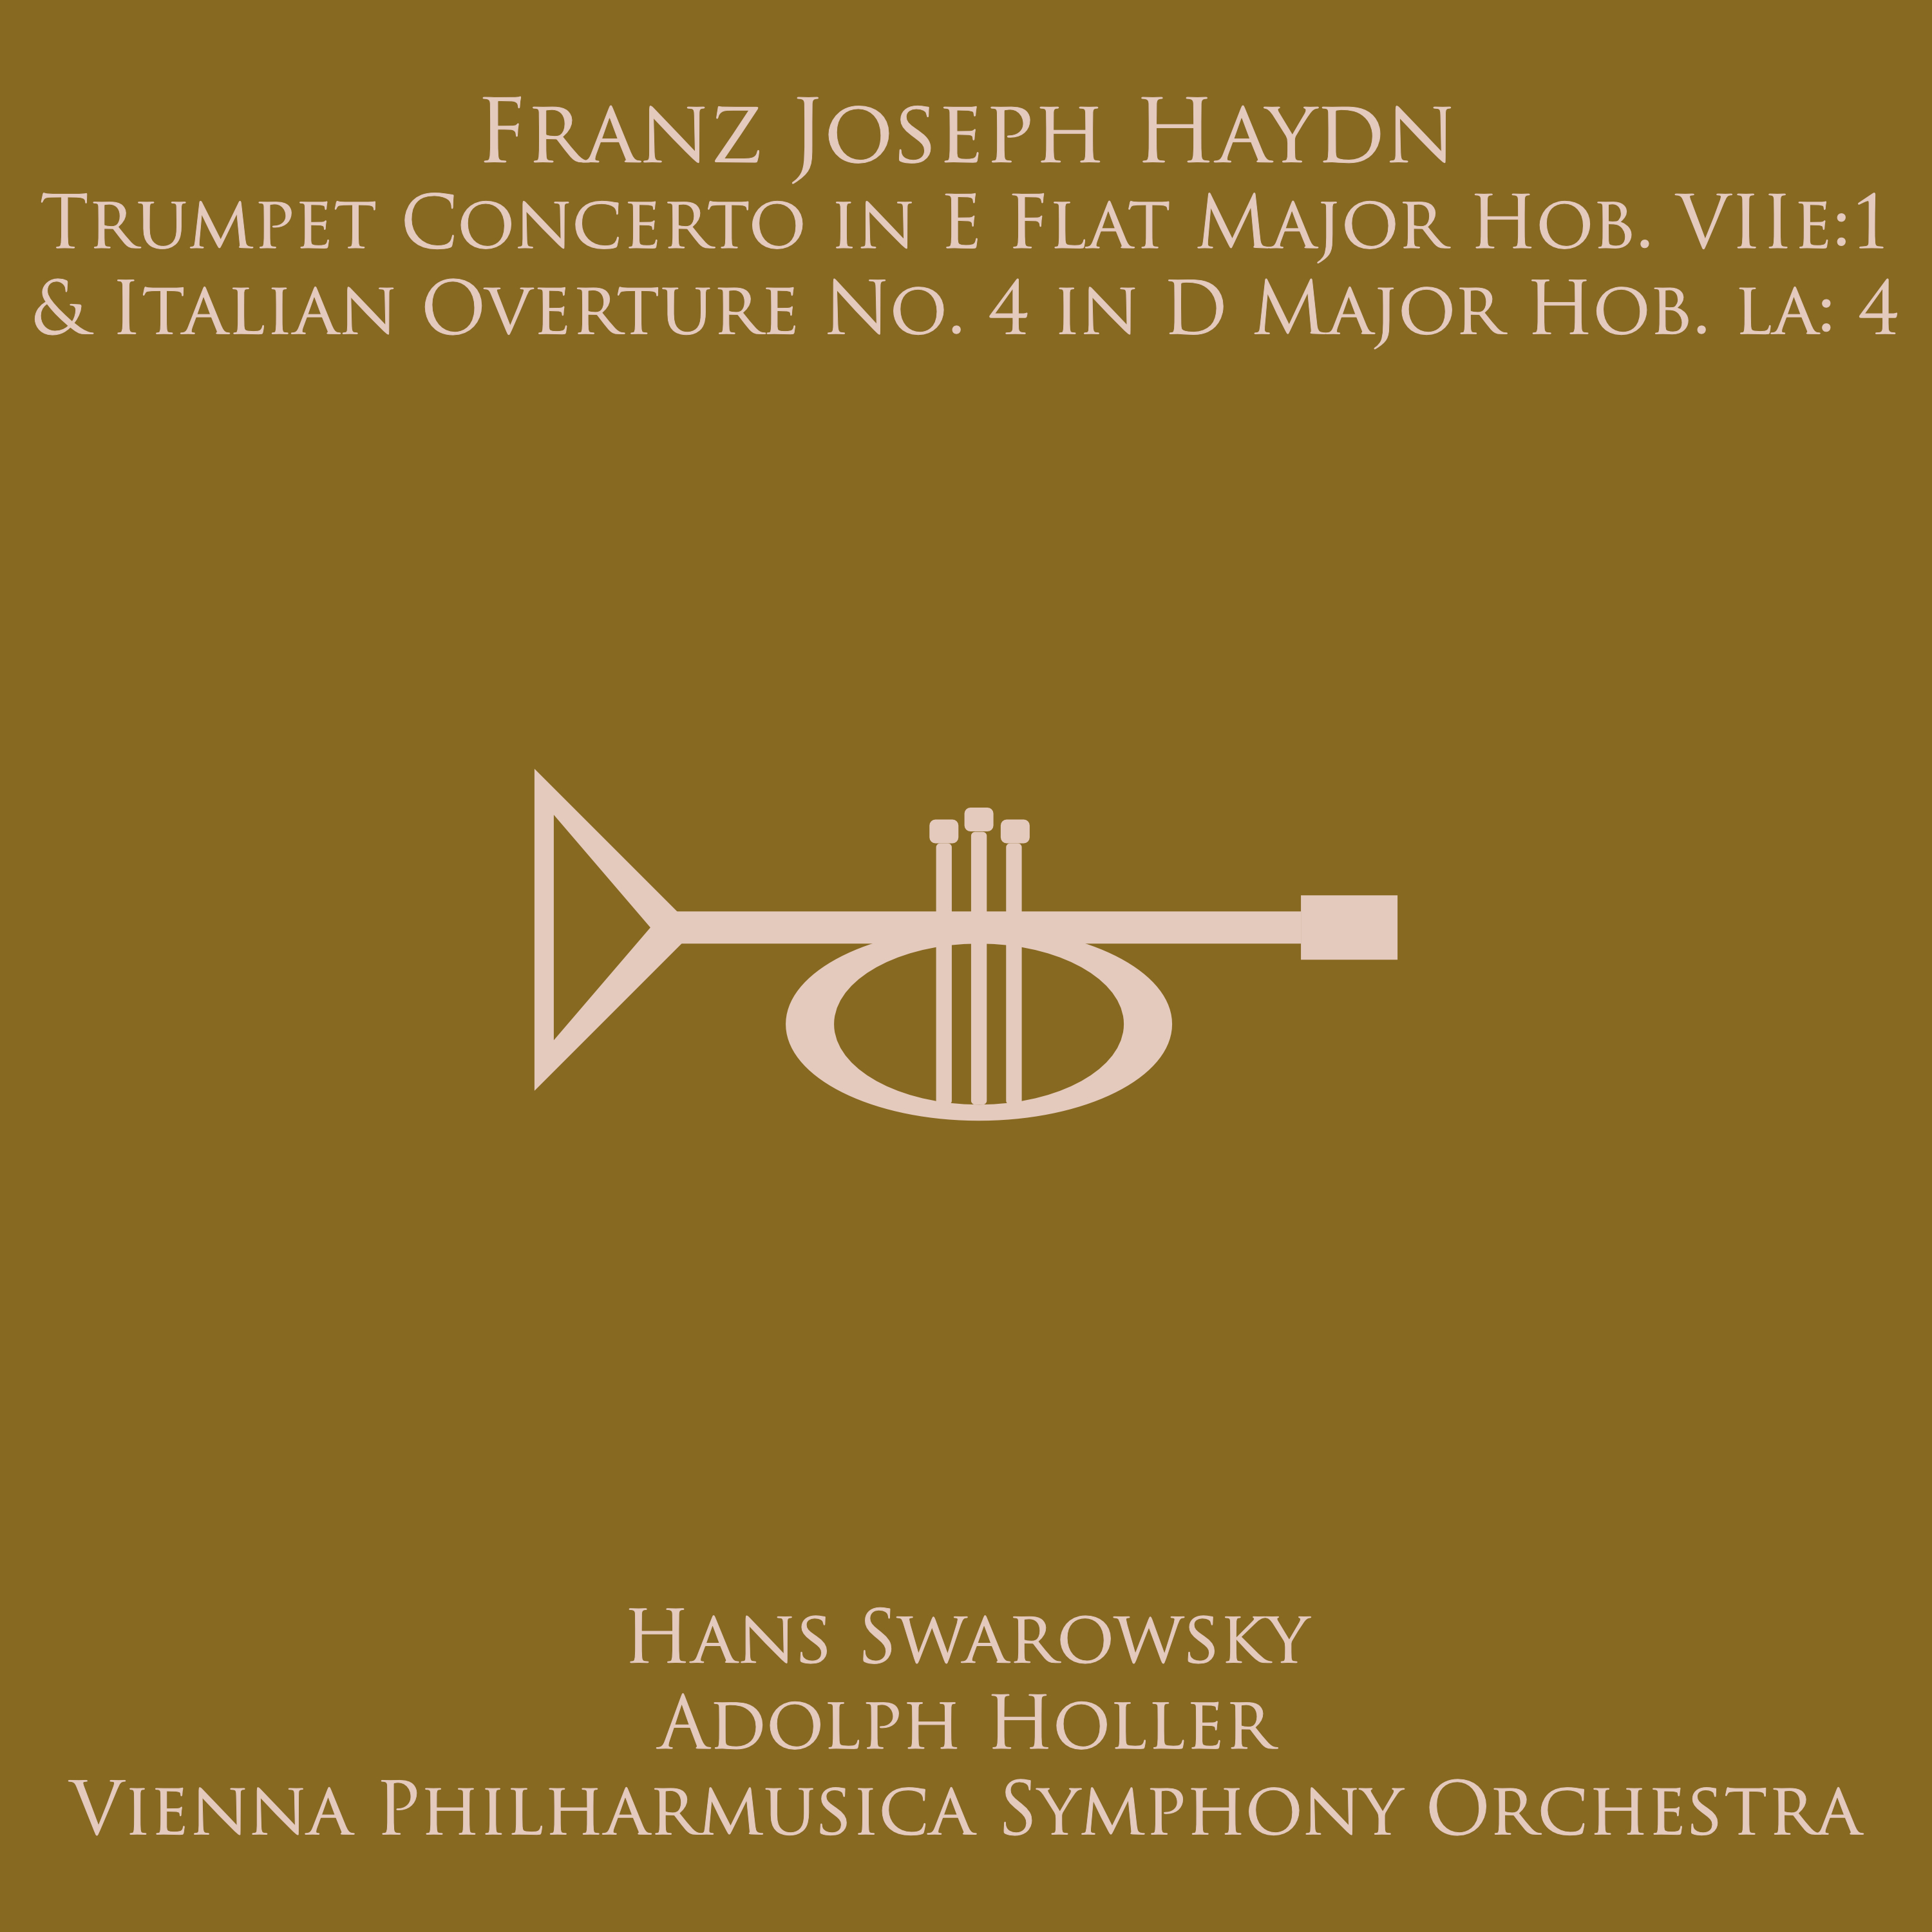 Haydn: Trumpet Concerto in E Flat Major, Hob. VIIe:1 / Overture No. 4 in D Major Hob. Ia:4